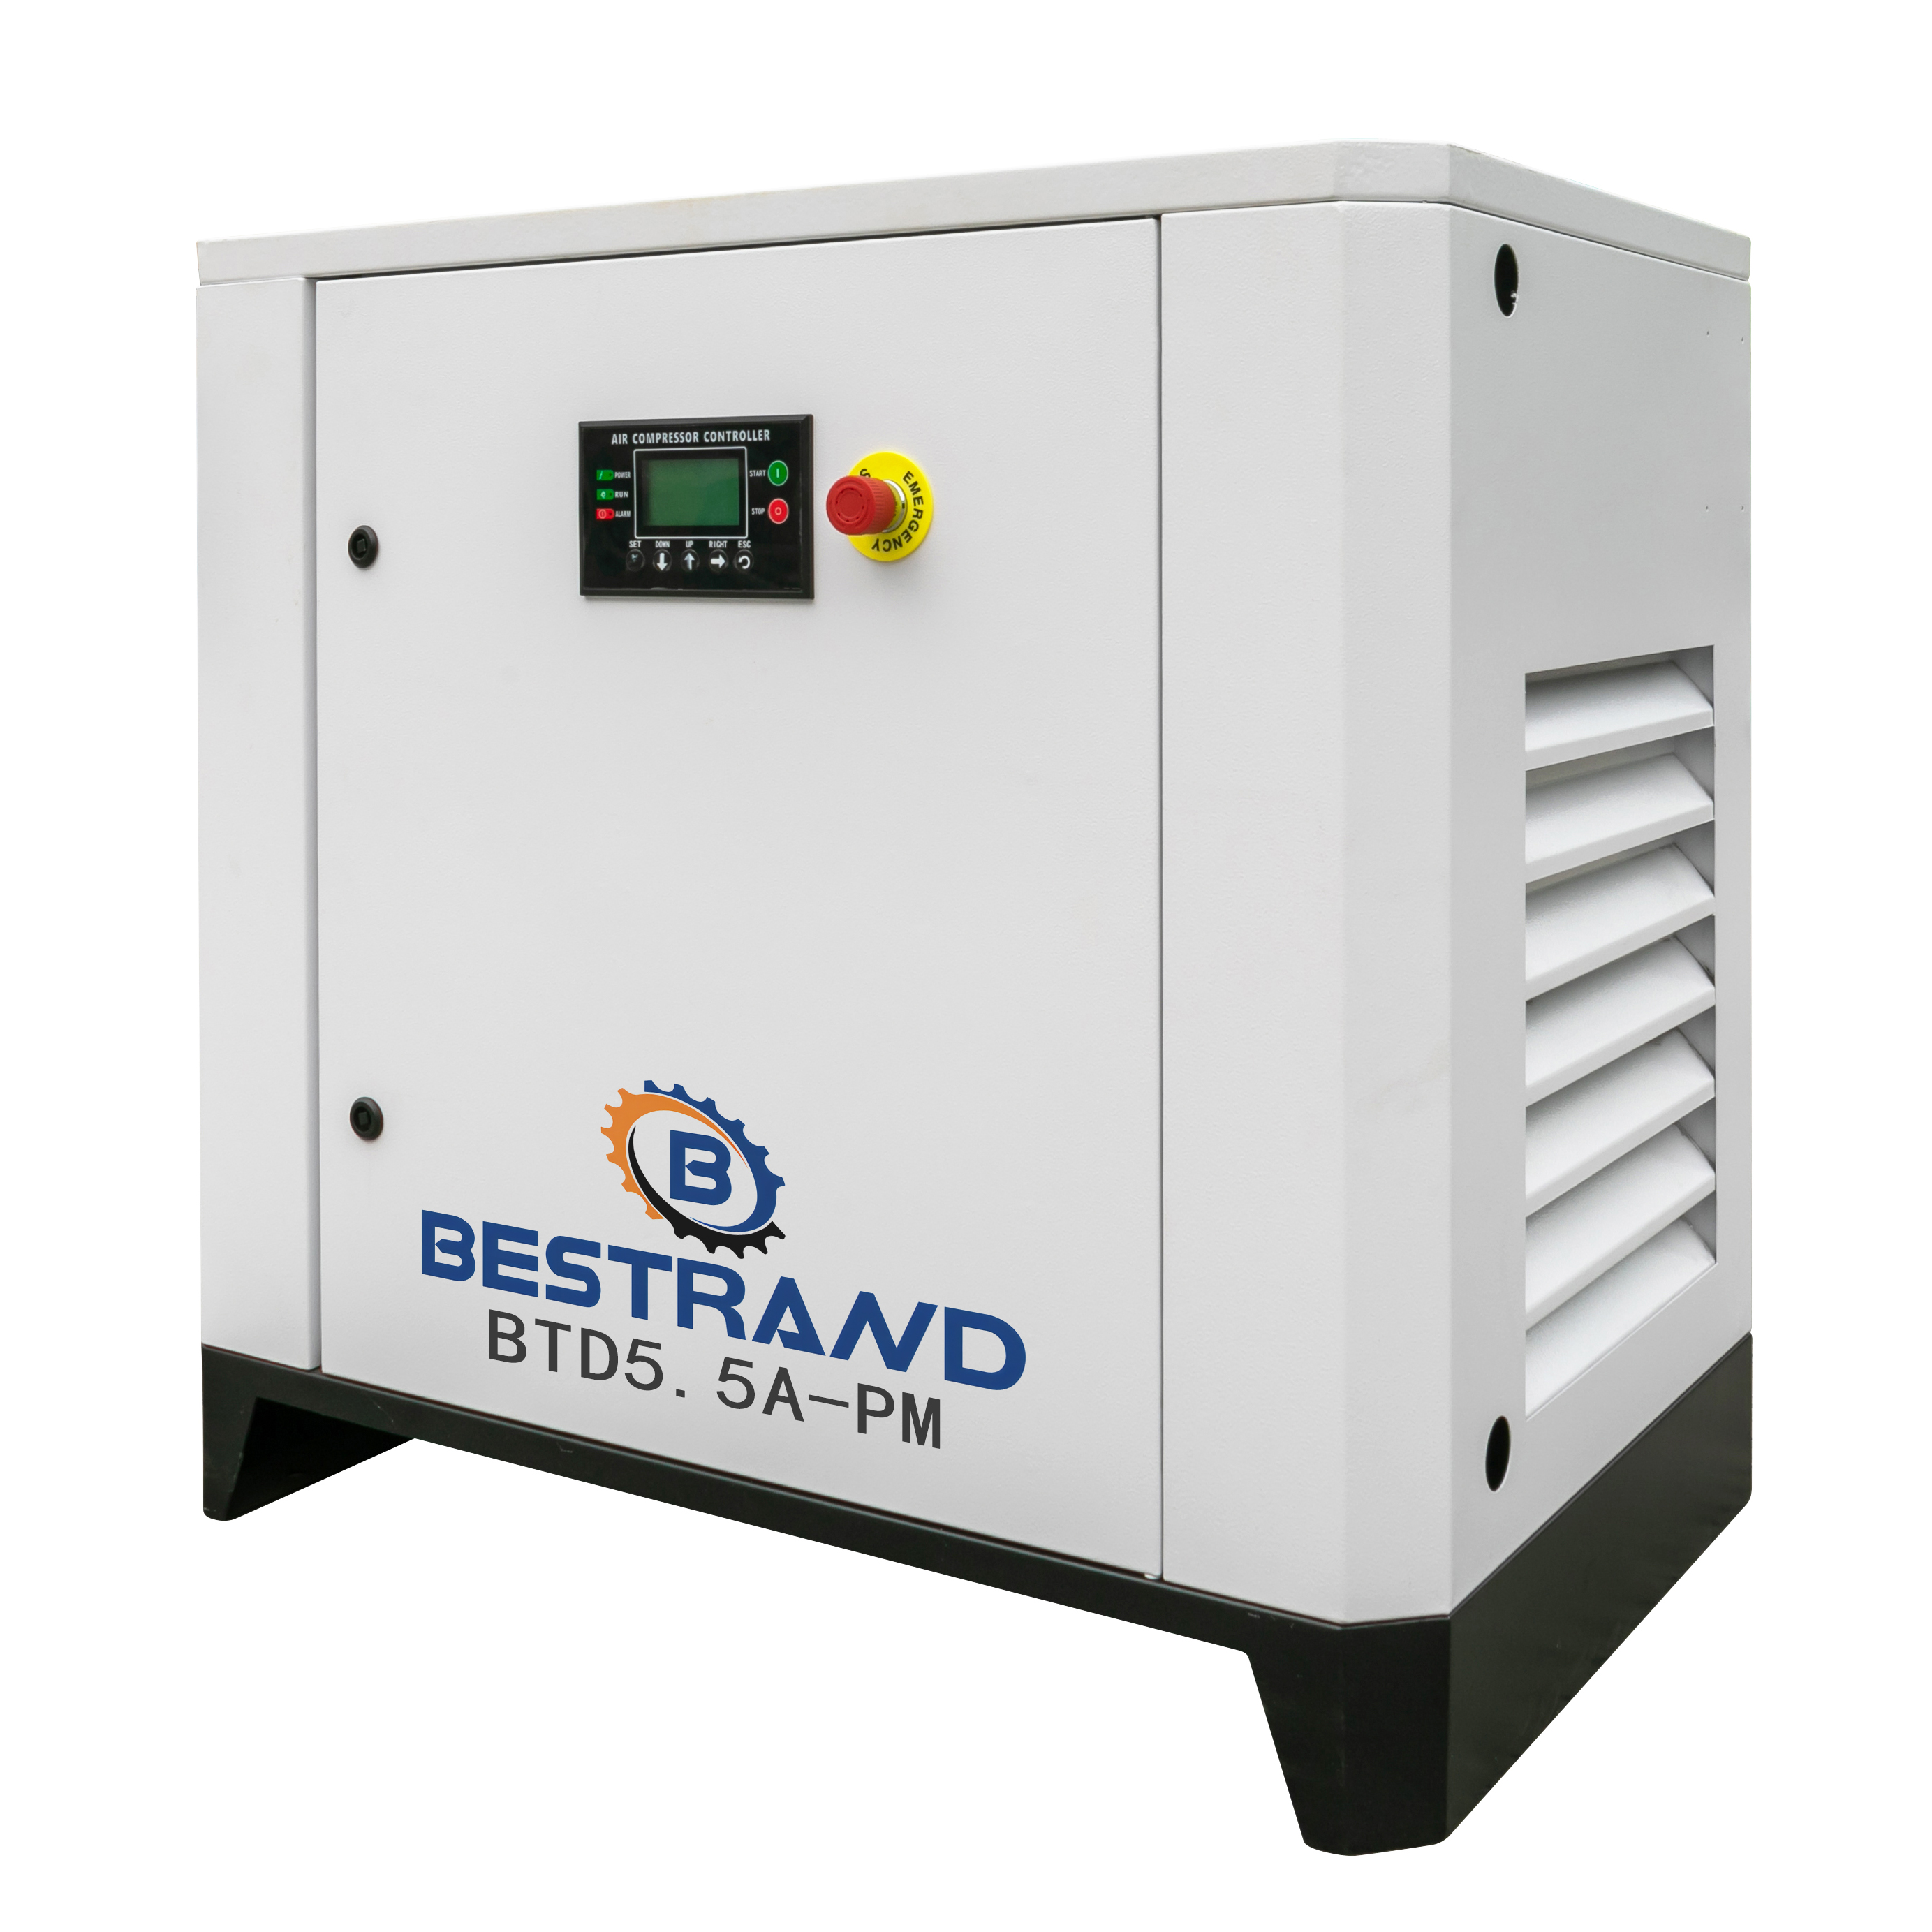 BESTRAND Permanent Magnet Inverter Screw Air Compressor BTD5.5A PM 